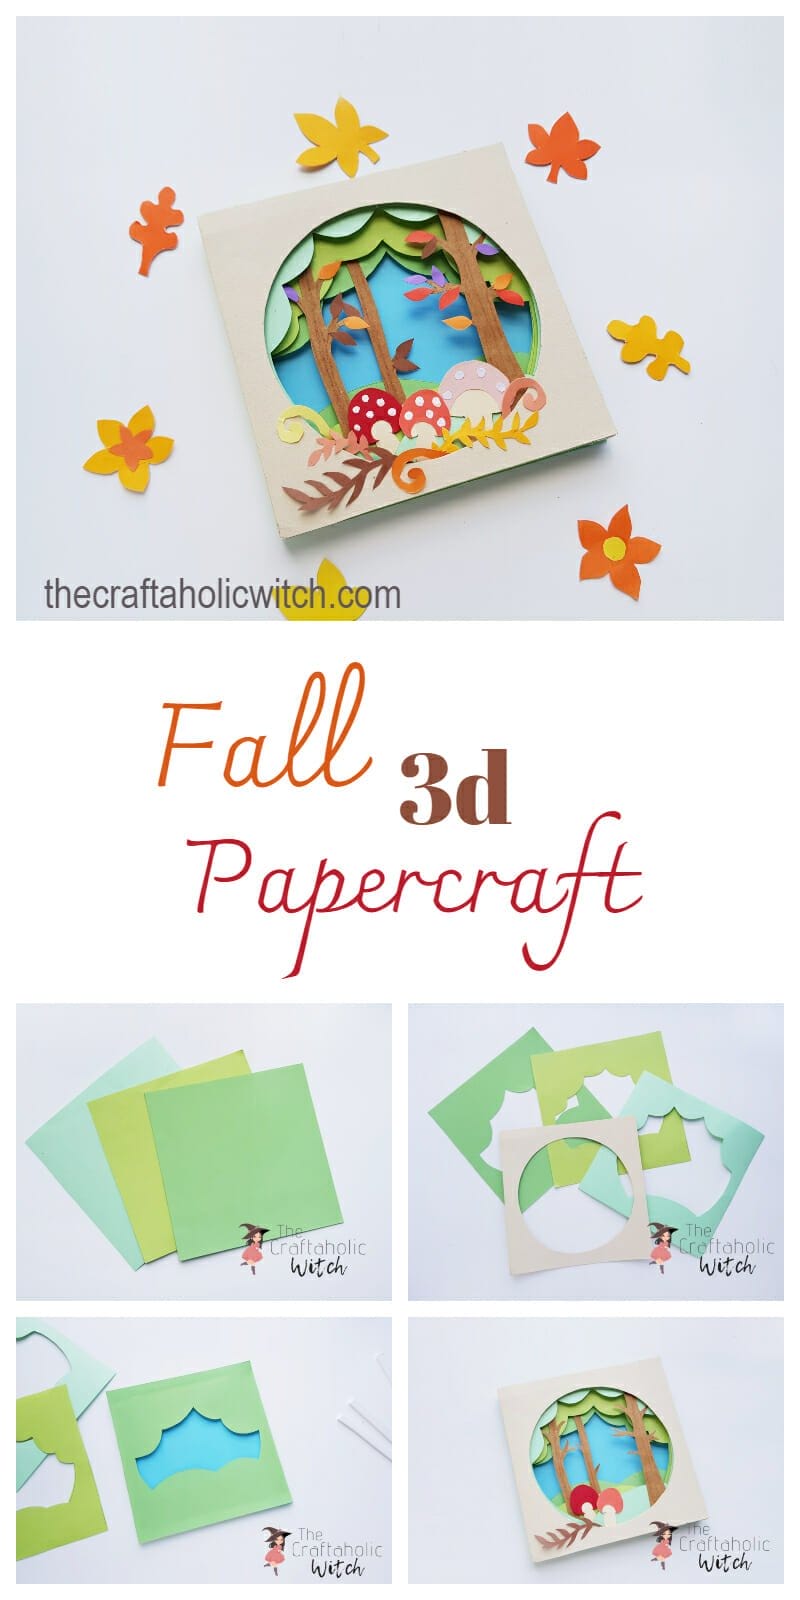 3d papercraft scene